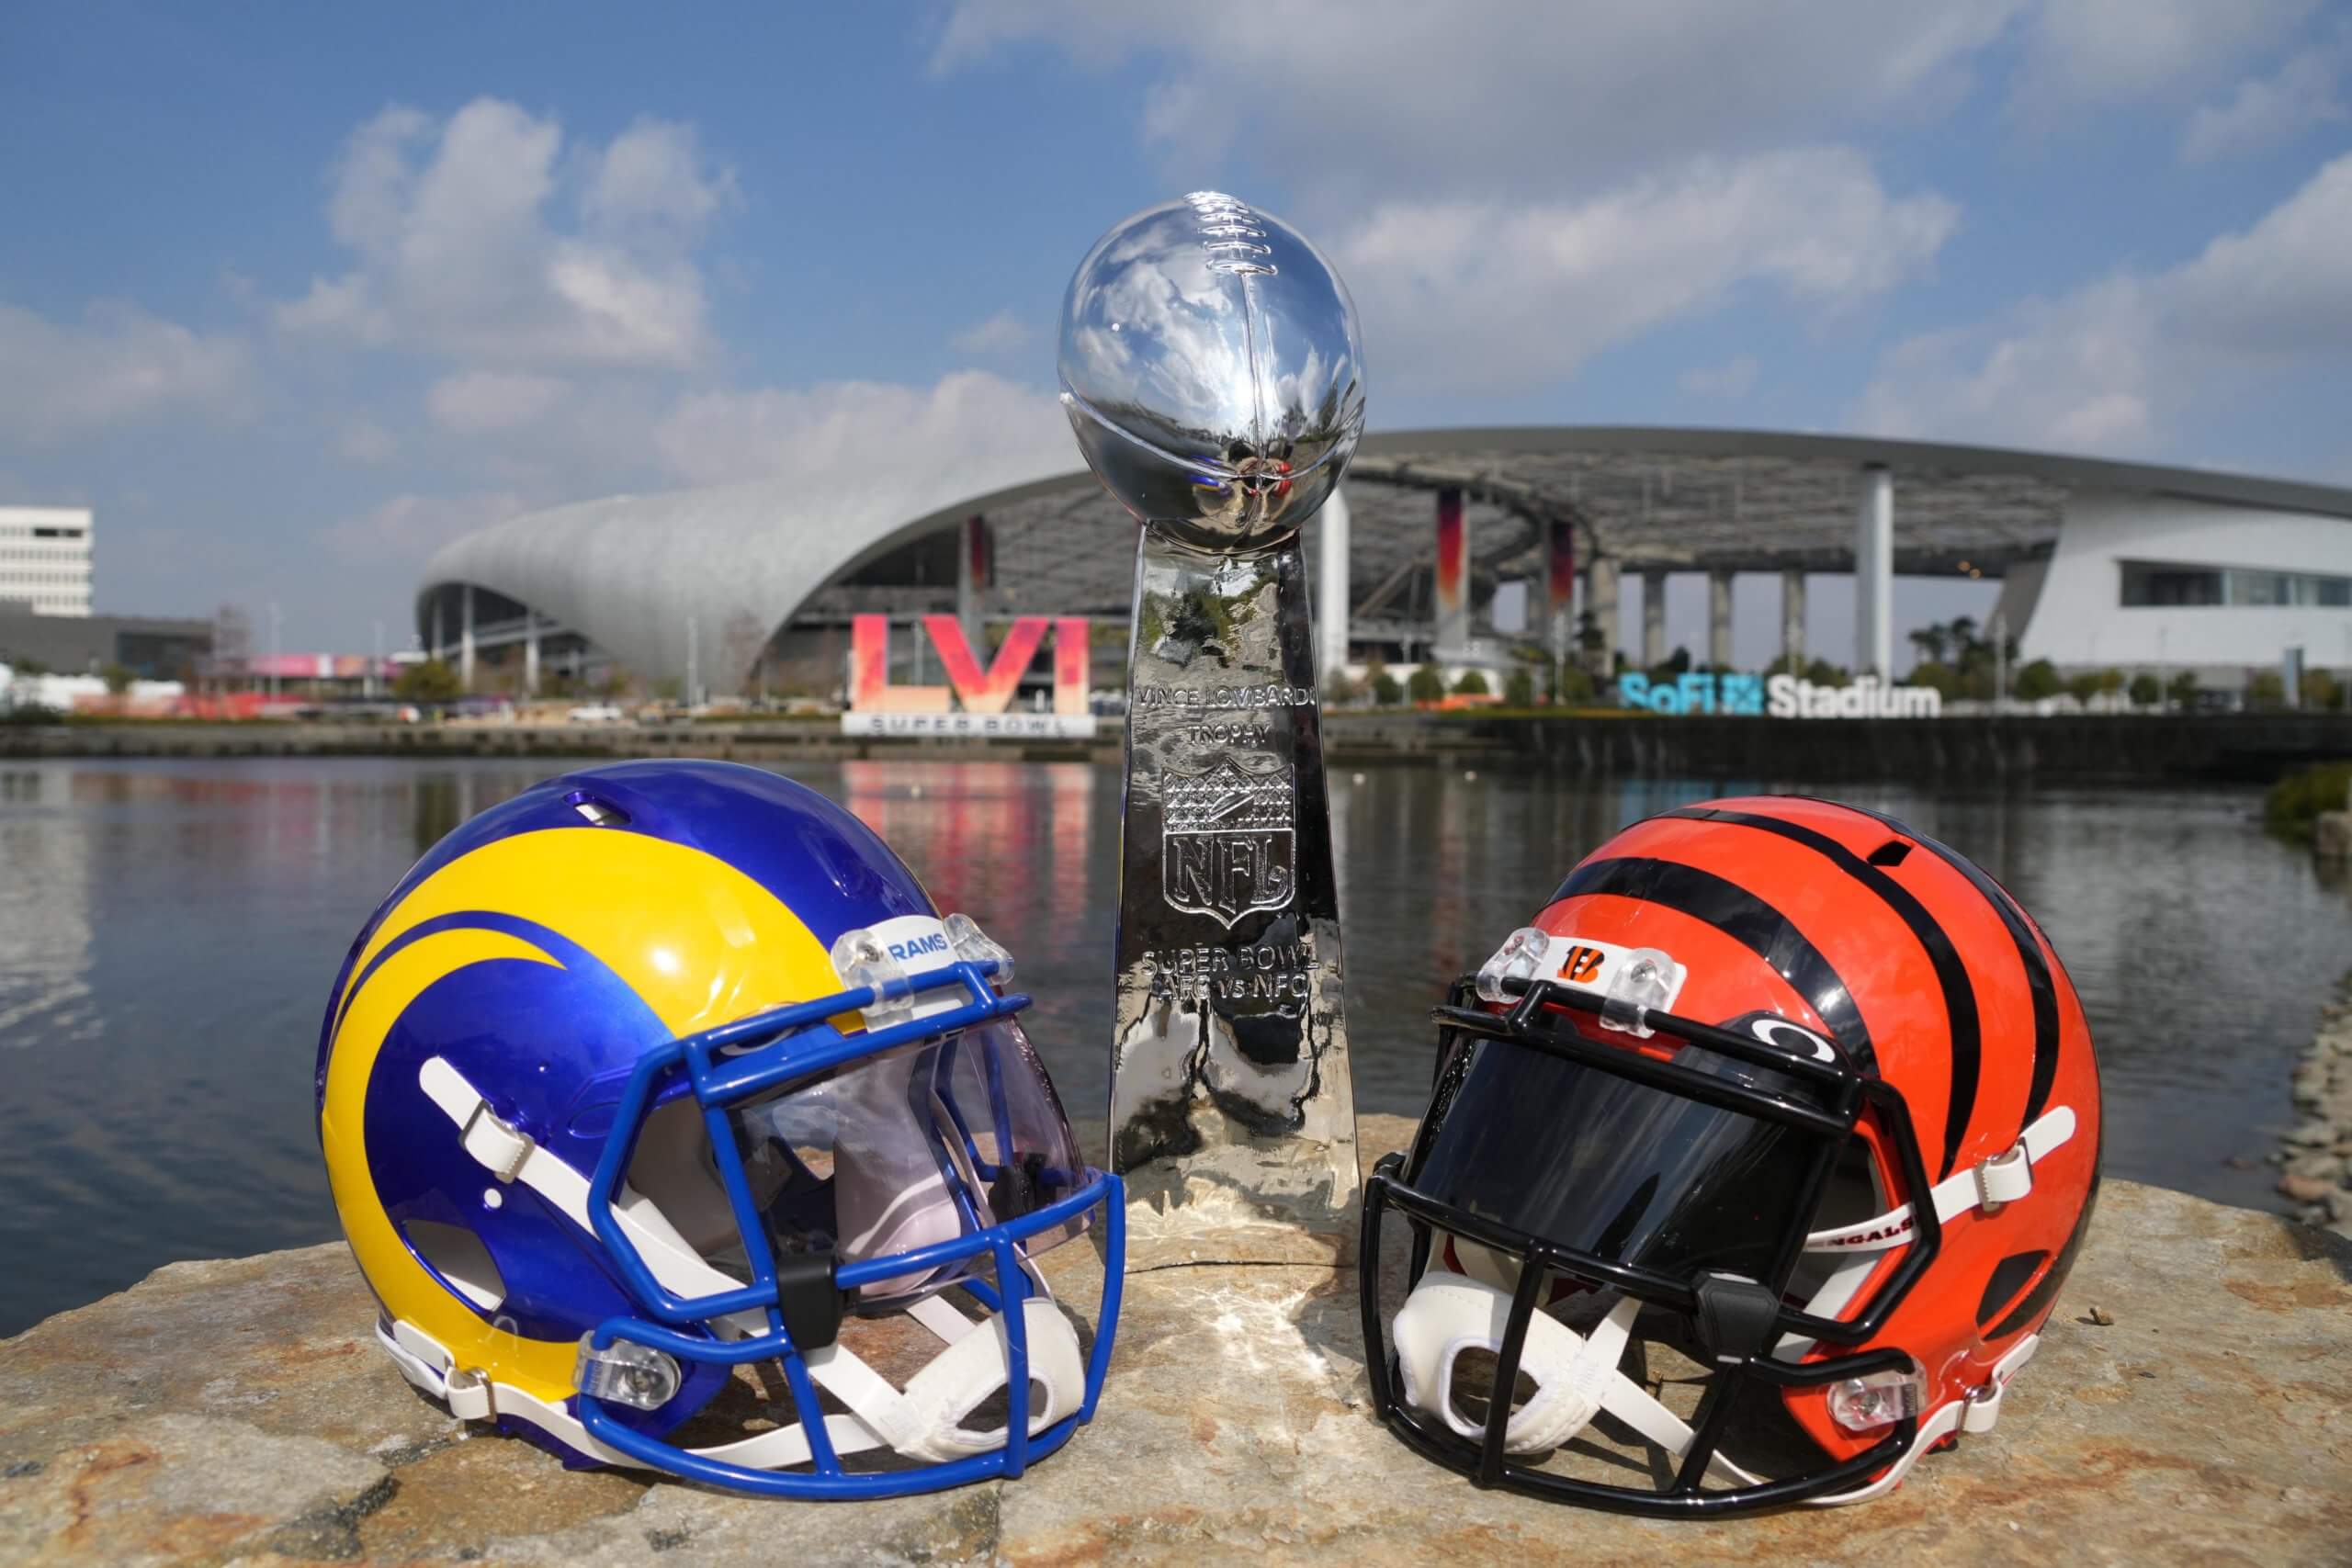 Cincinnati Bengals vs. Los Angeles Rams Super Bowl 56 Preview